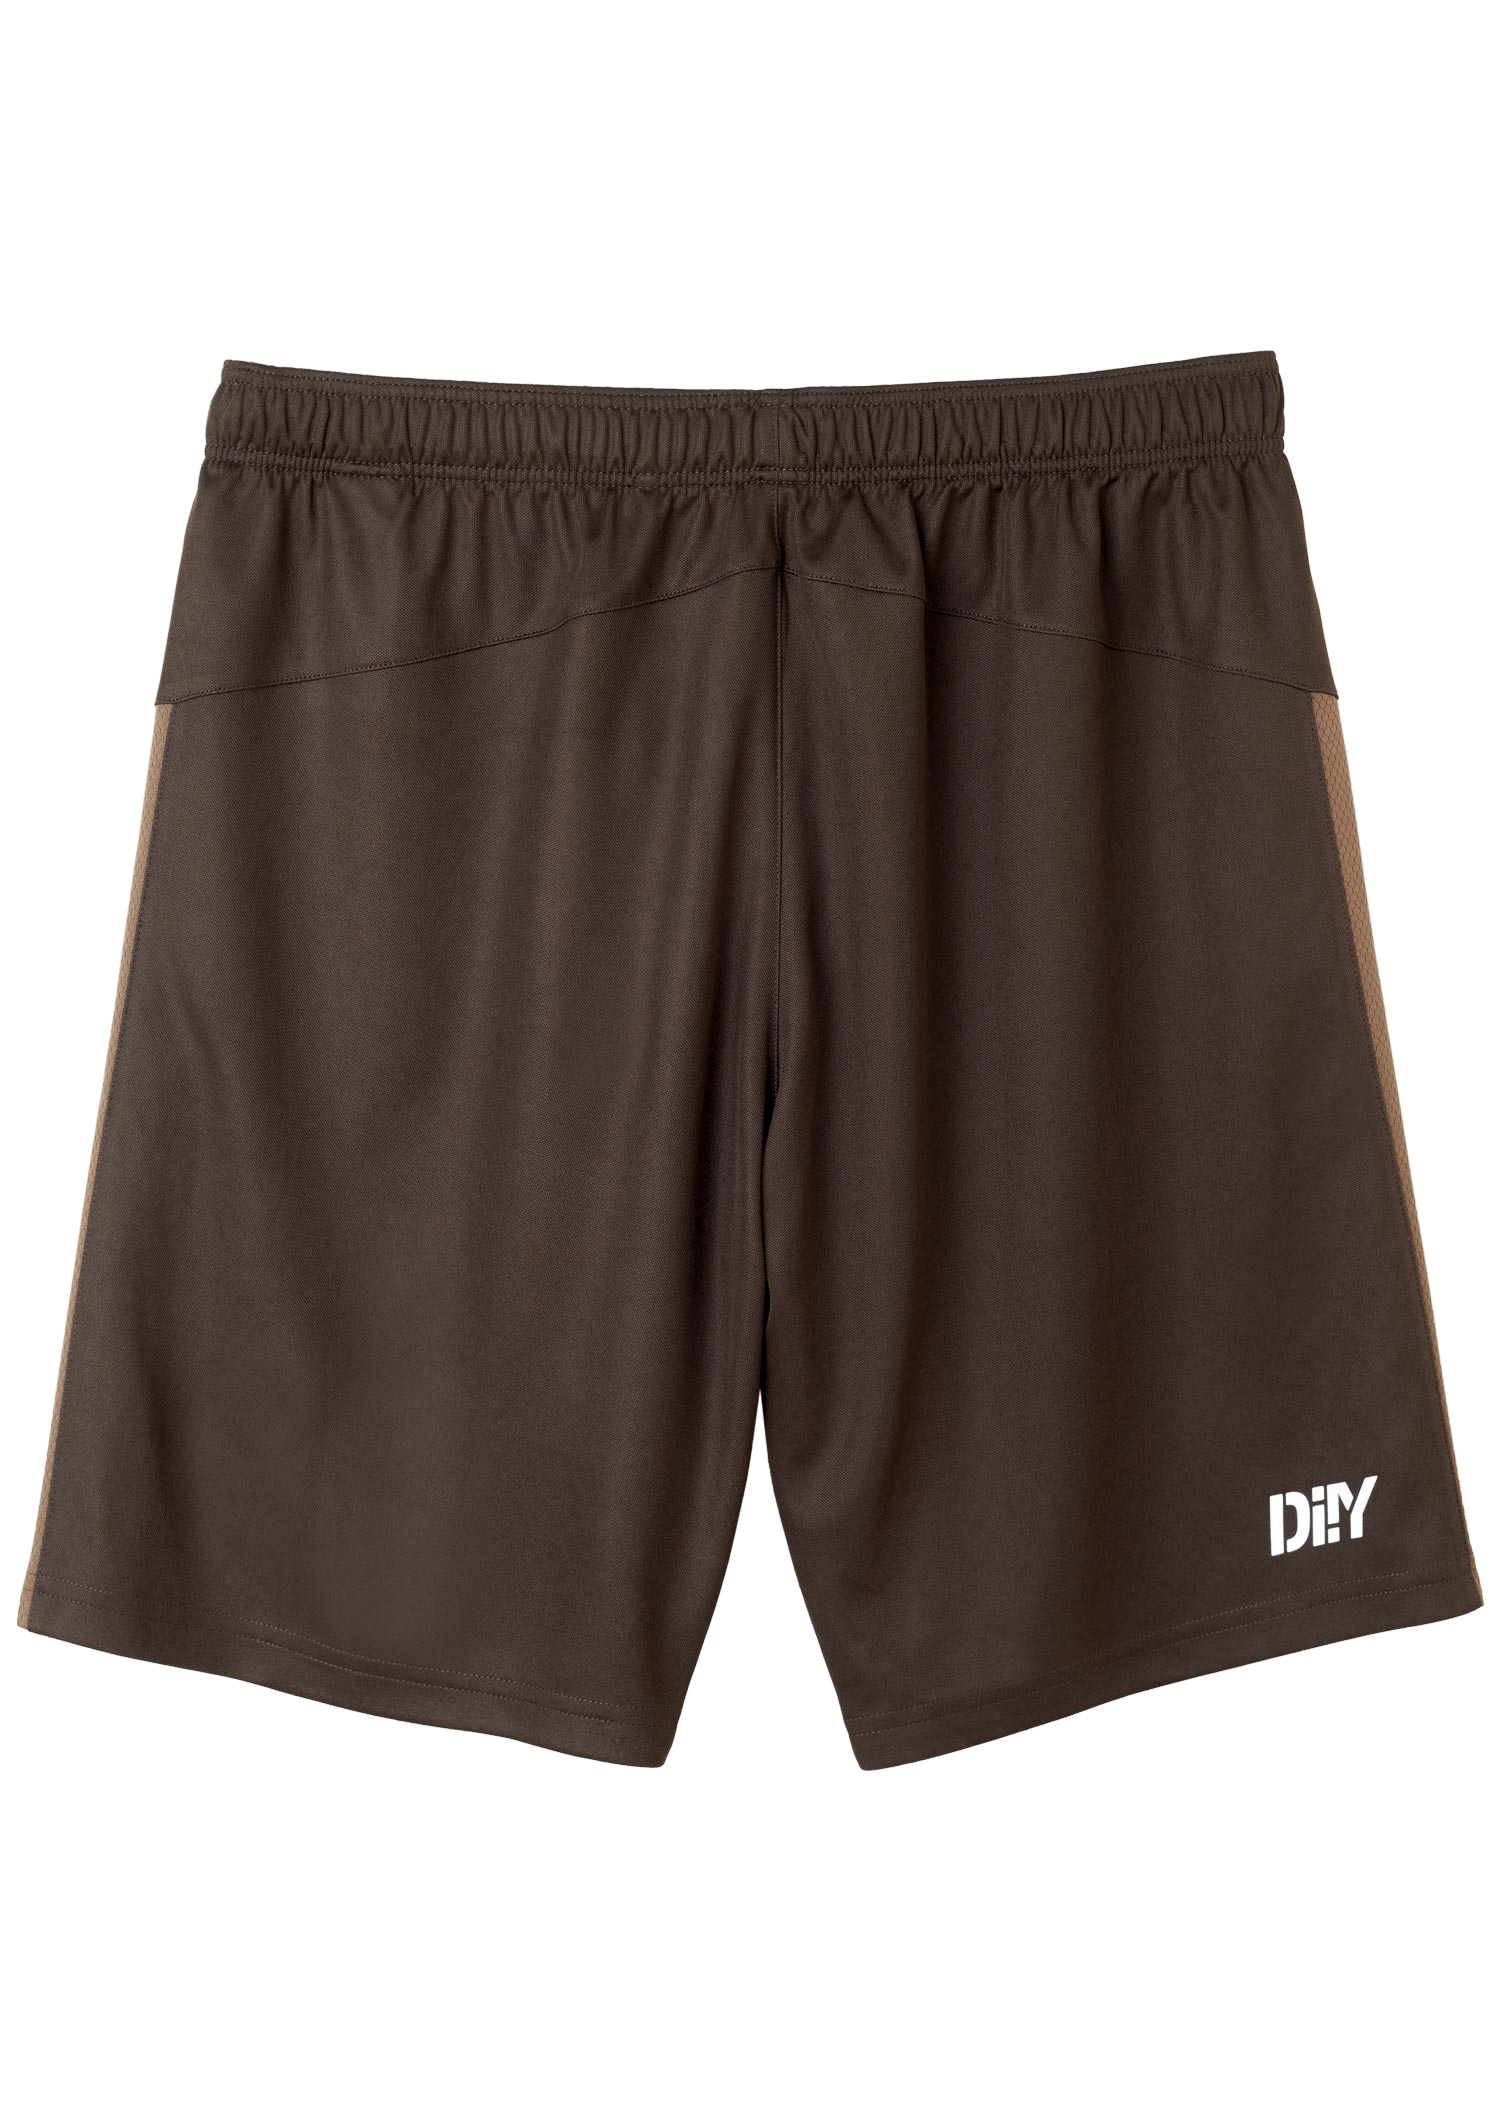 DIIY - Shorts Home 2022-23